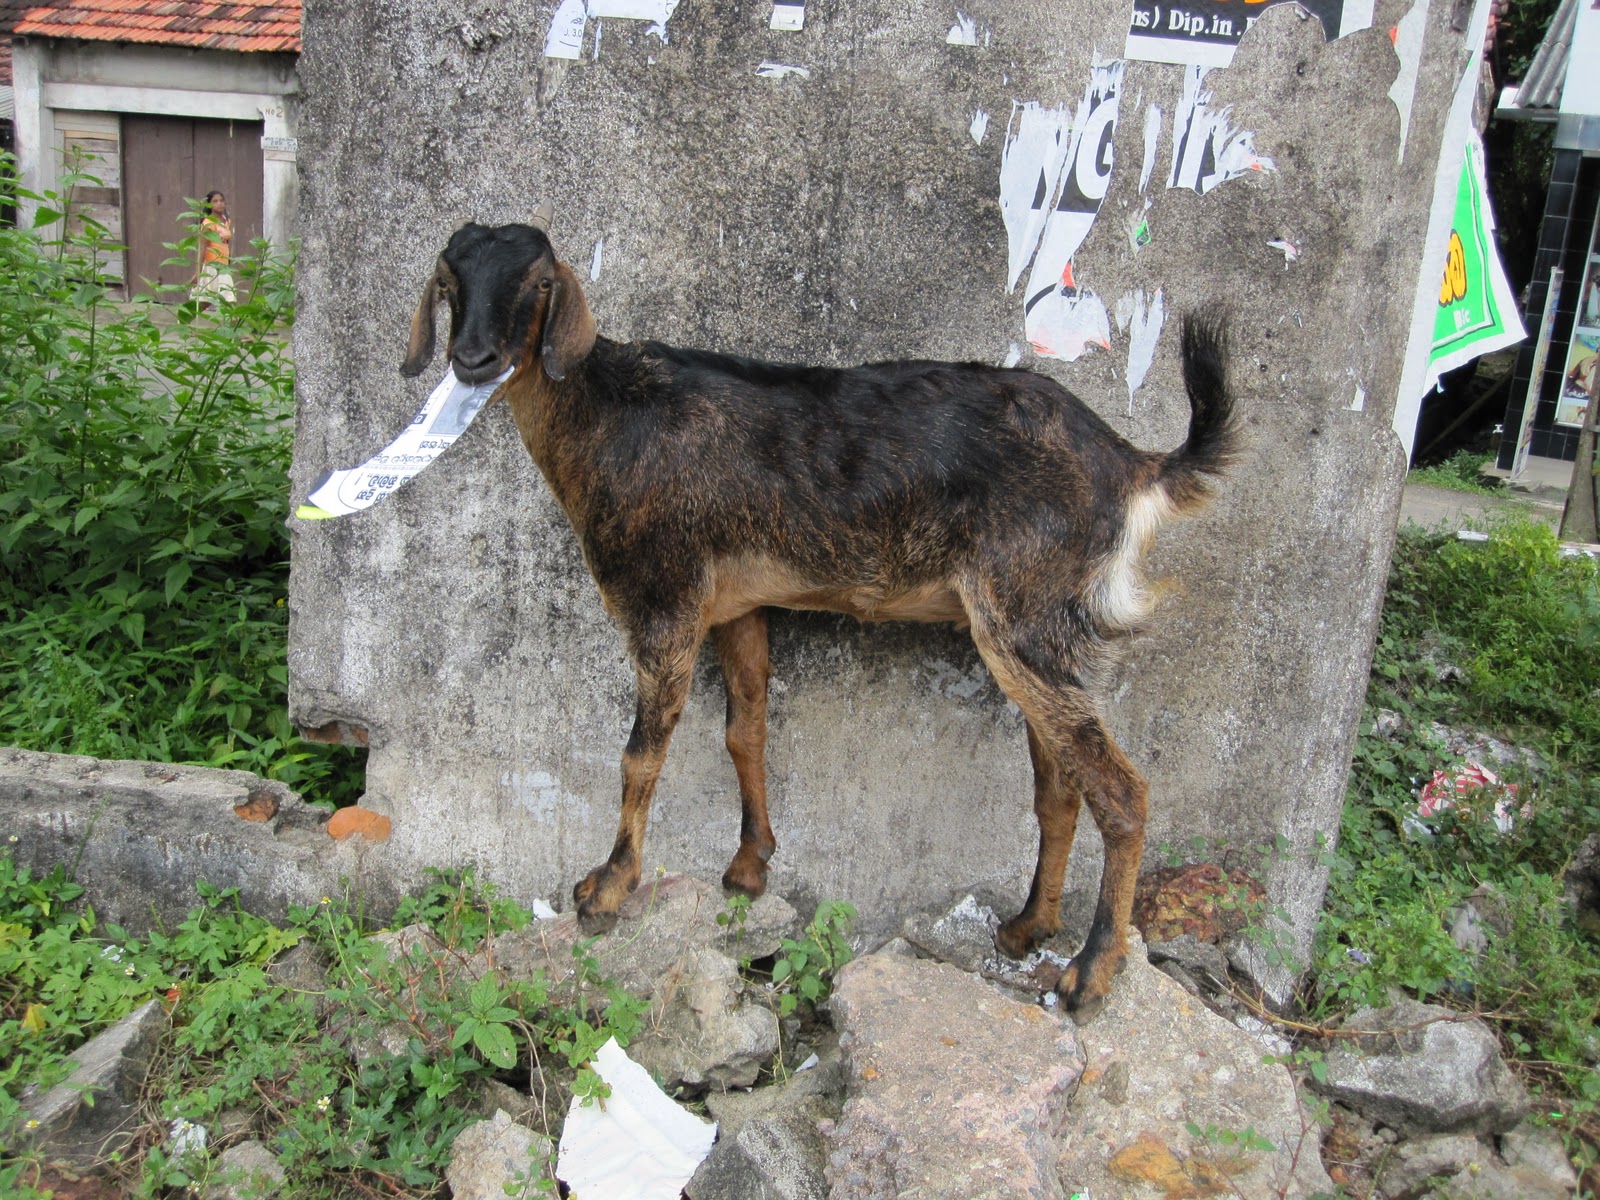 Sri Lanka is fun, part 1: Hungry goat